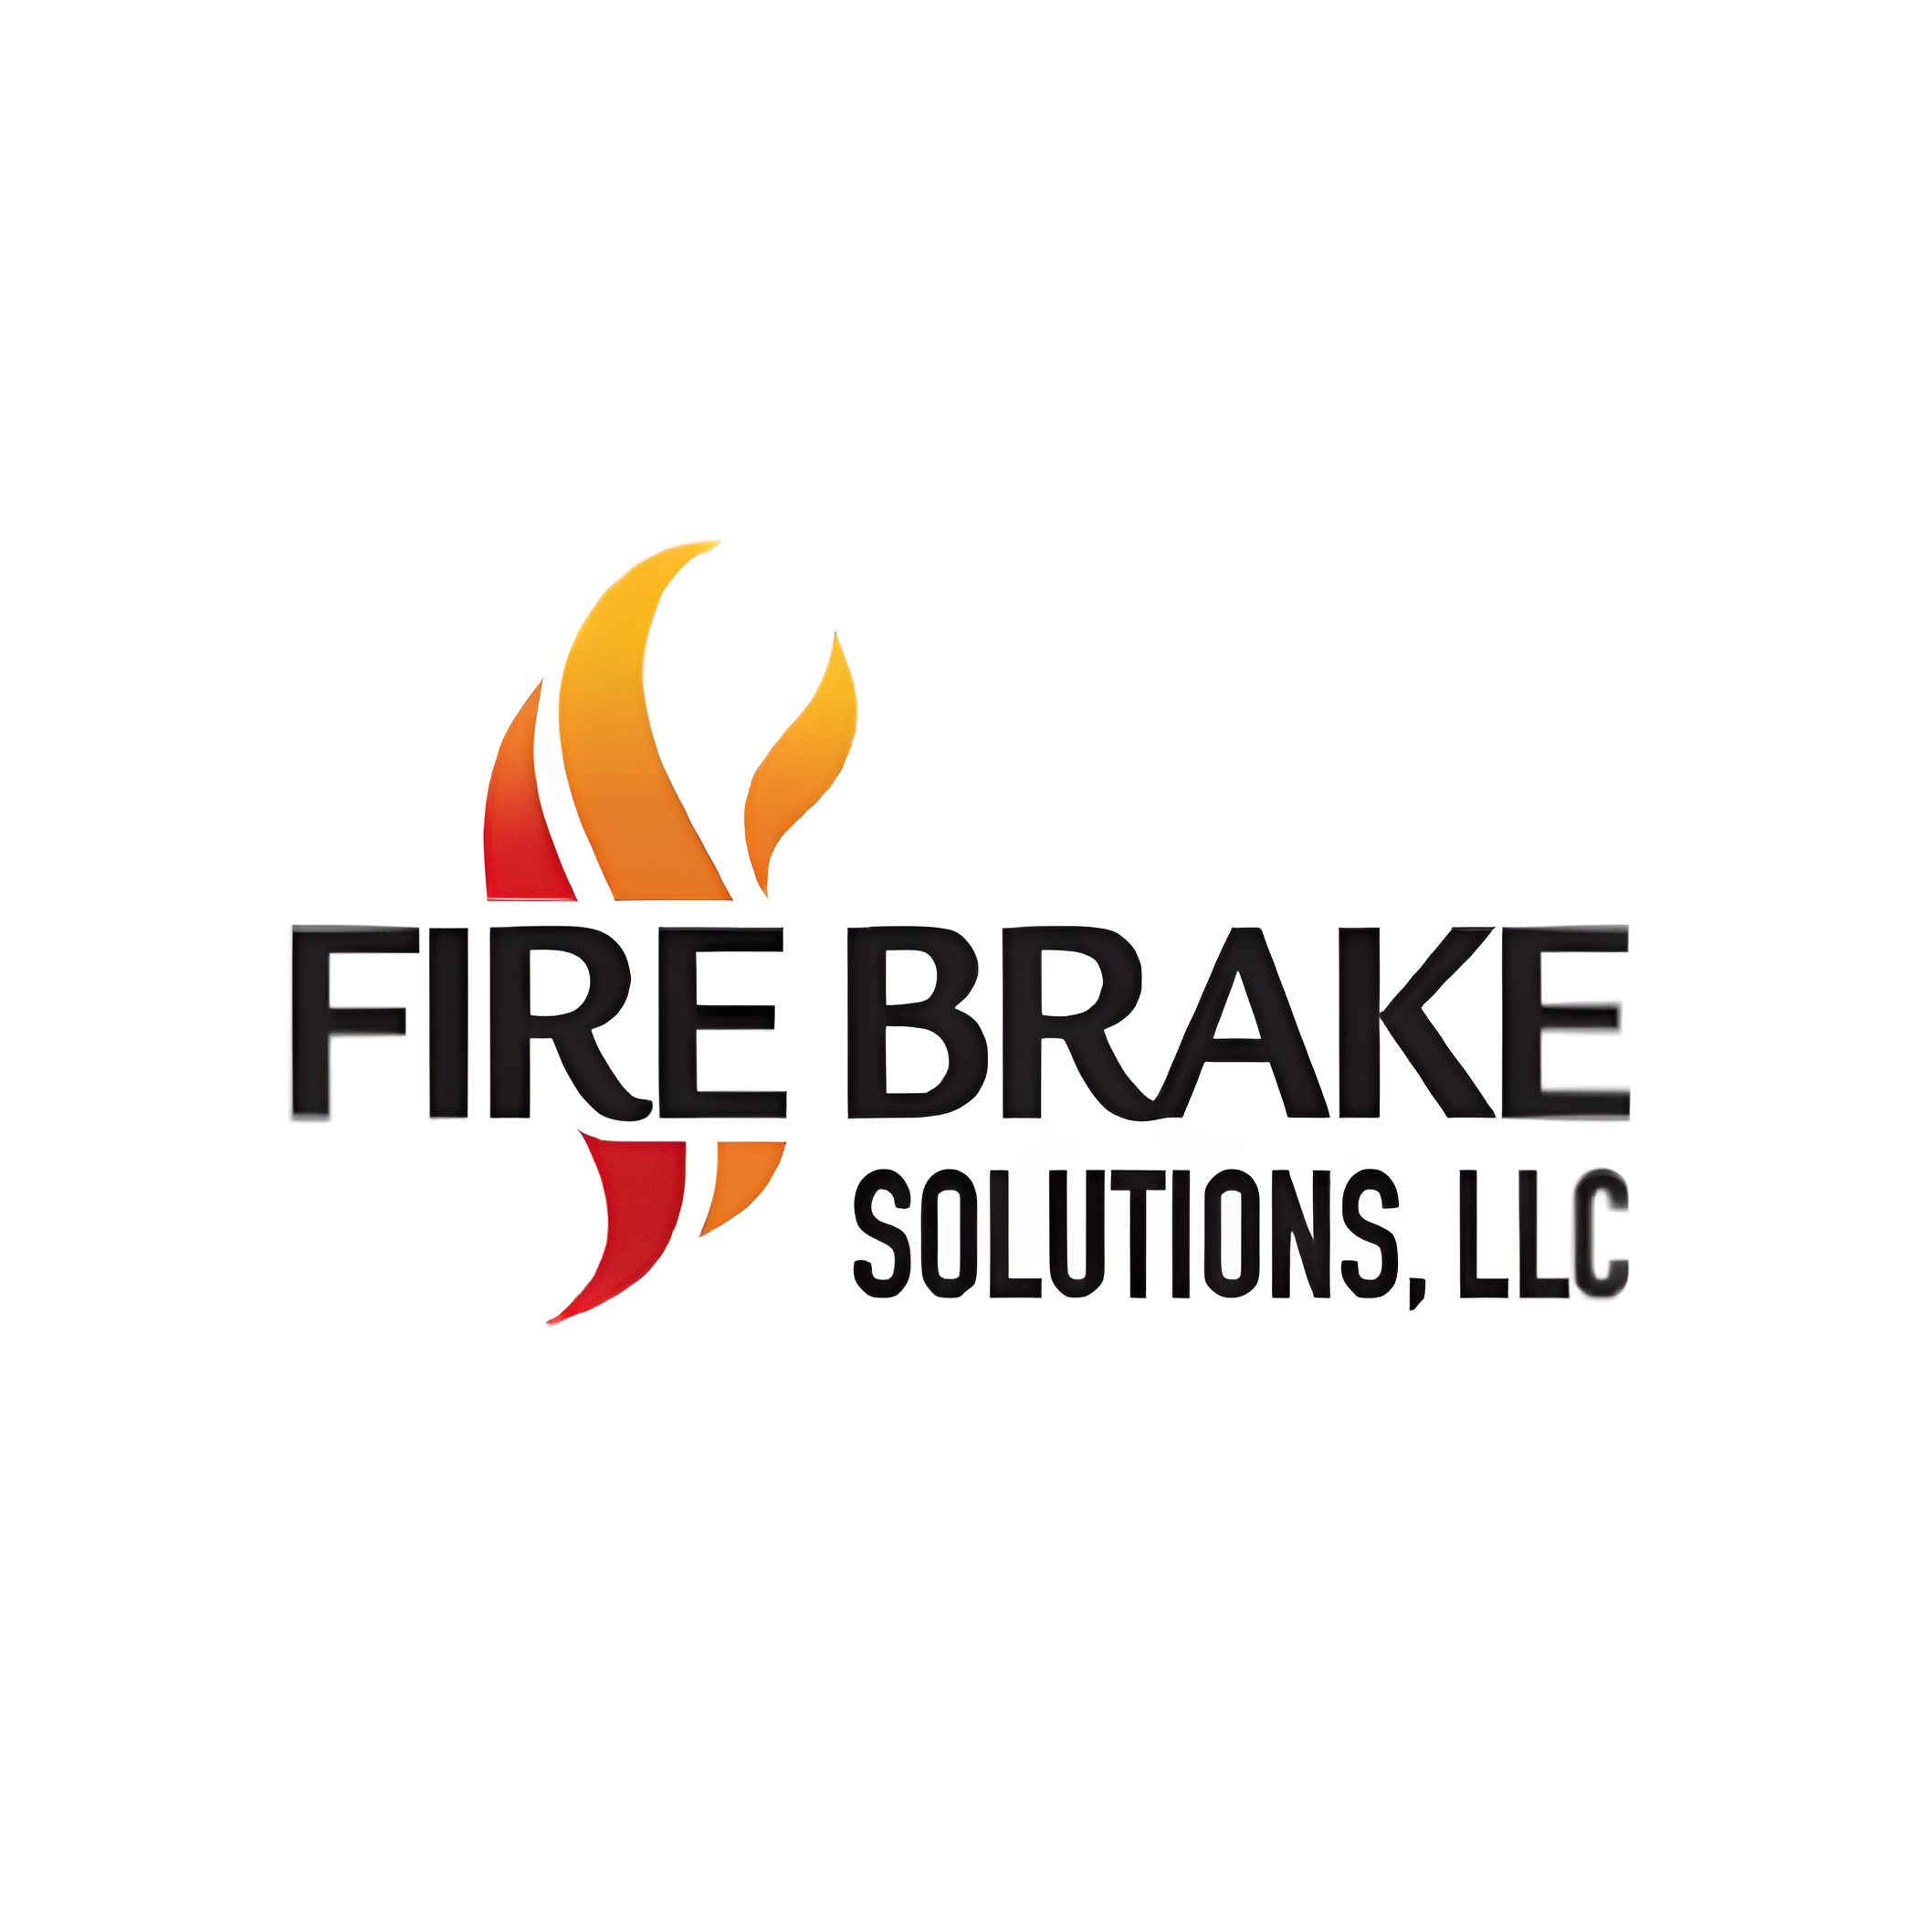 Fire brake solutions logo